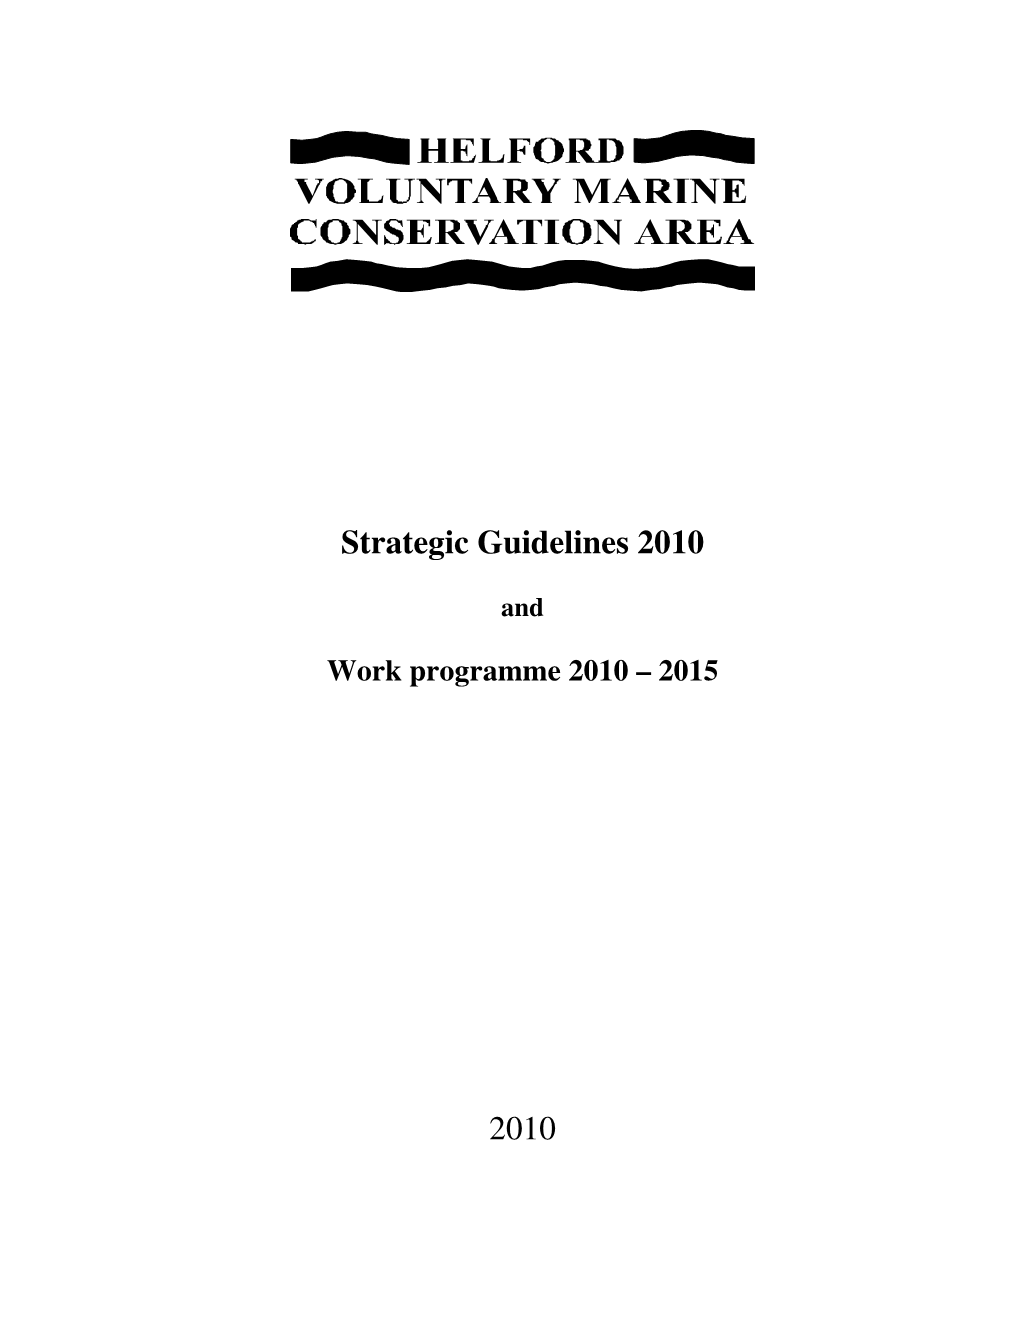 Strategic Guidelines & Work Programme 2010-2015